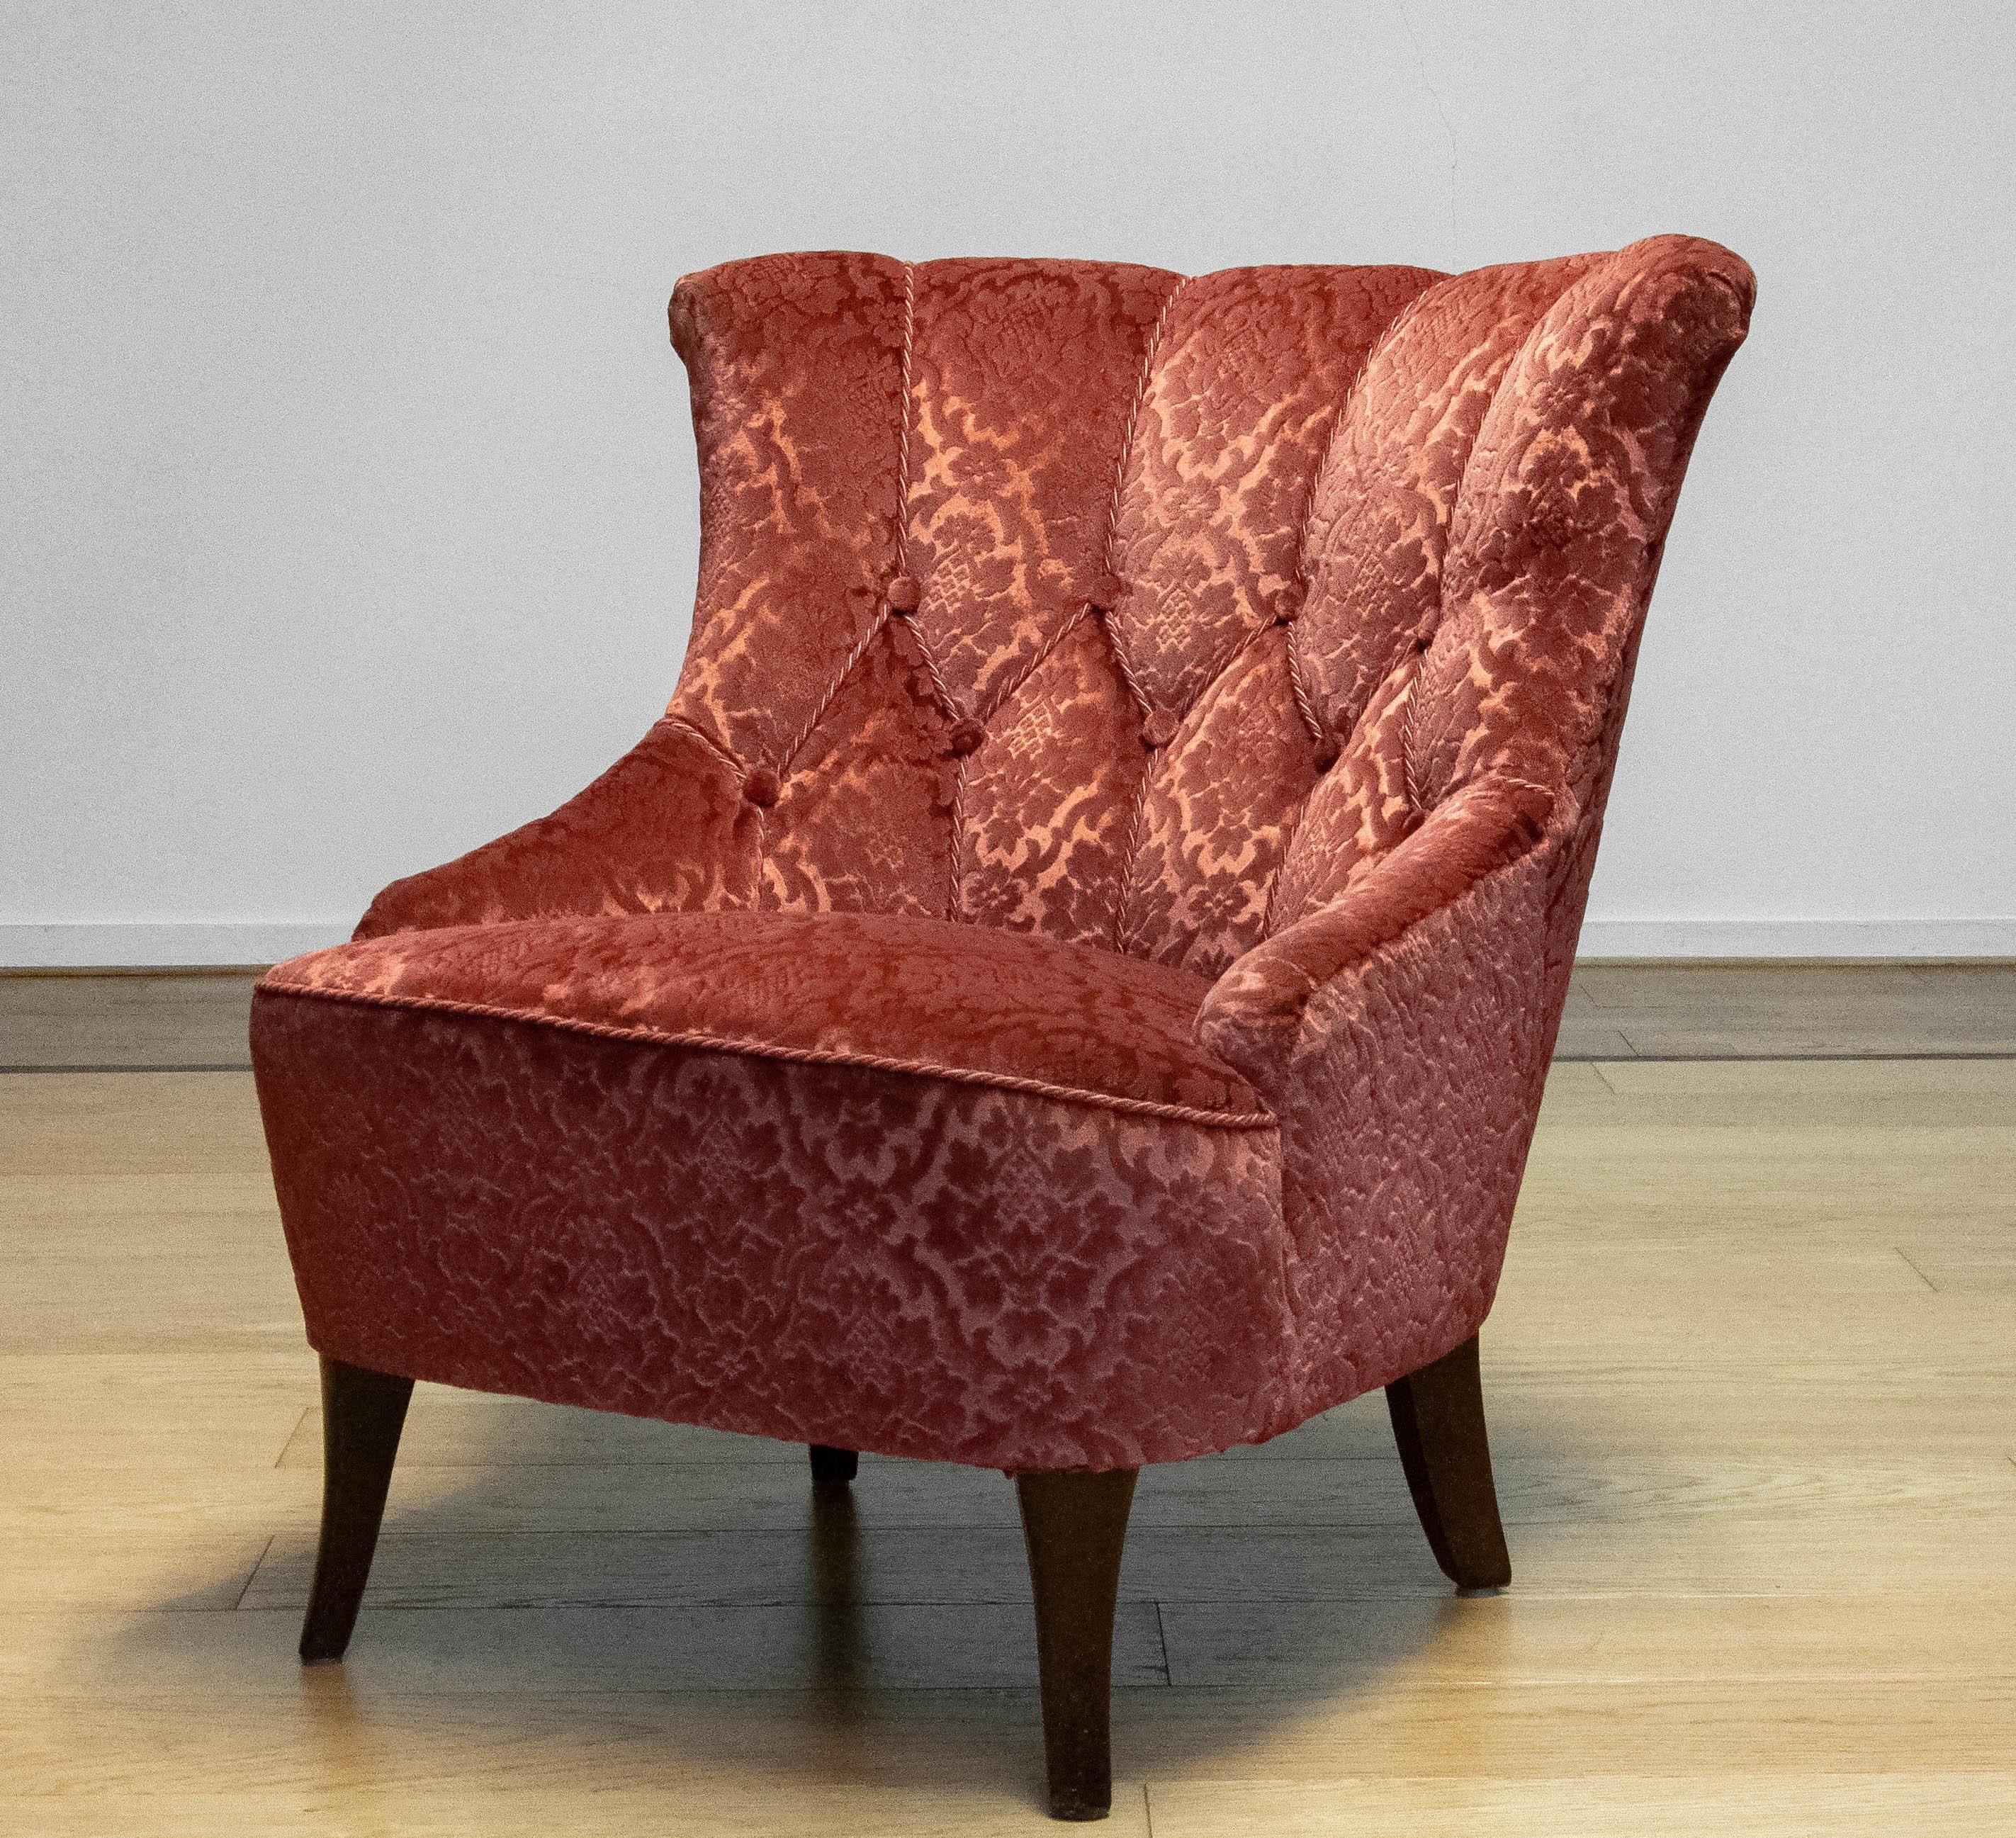 20th Century Napoleon III Slipper Chair In Brique Ton Sur Ton Jacquard Velvet For Sale 3